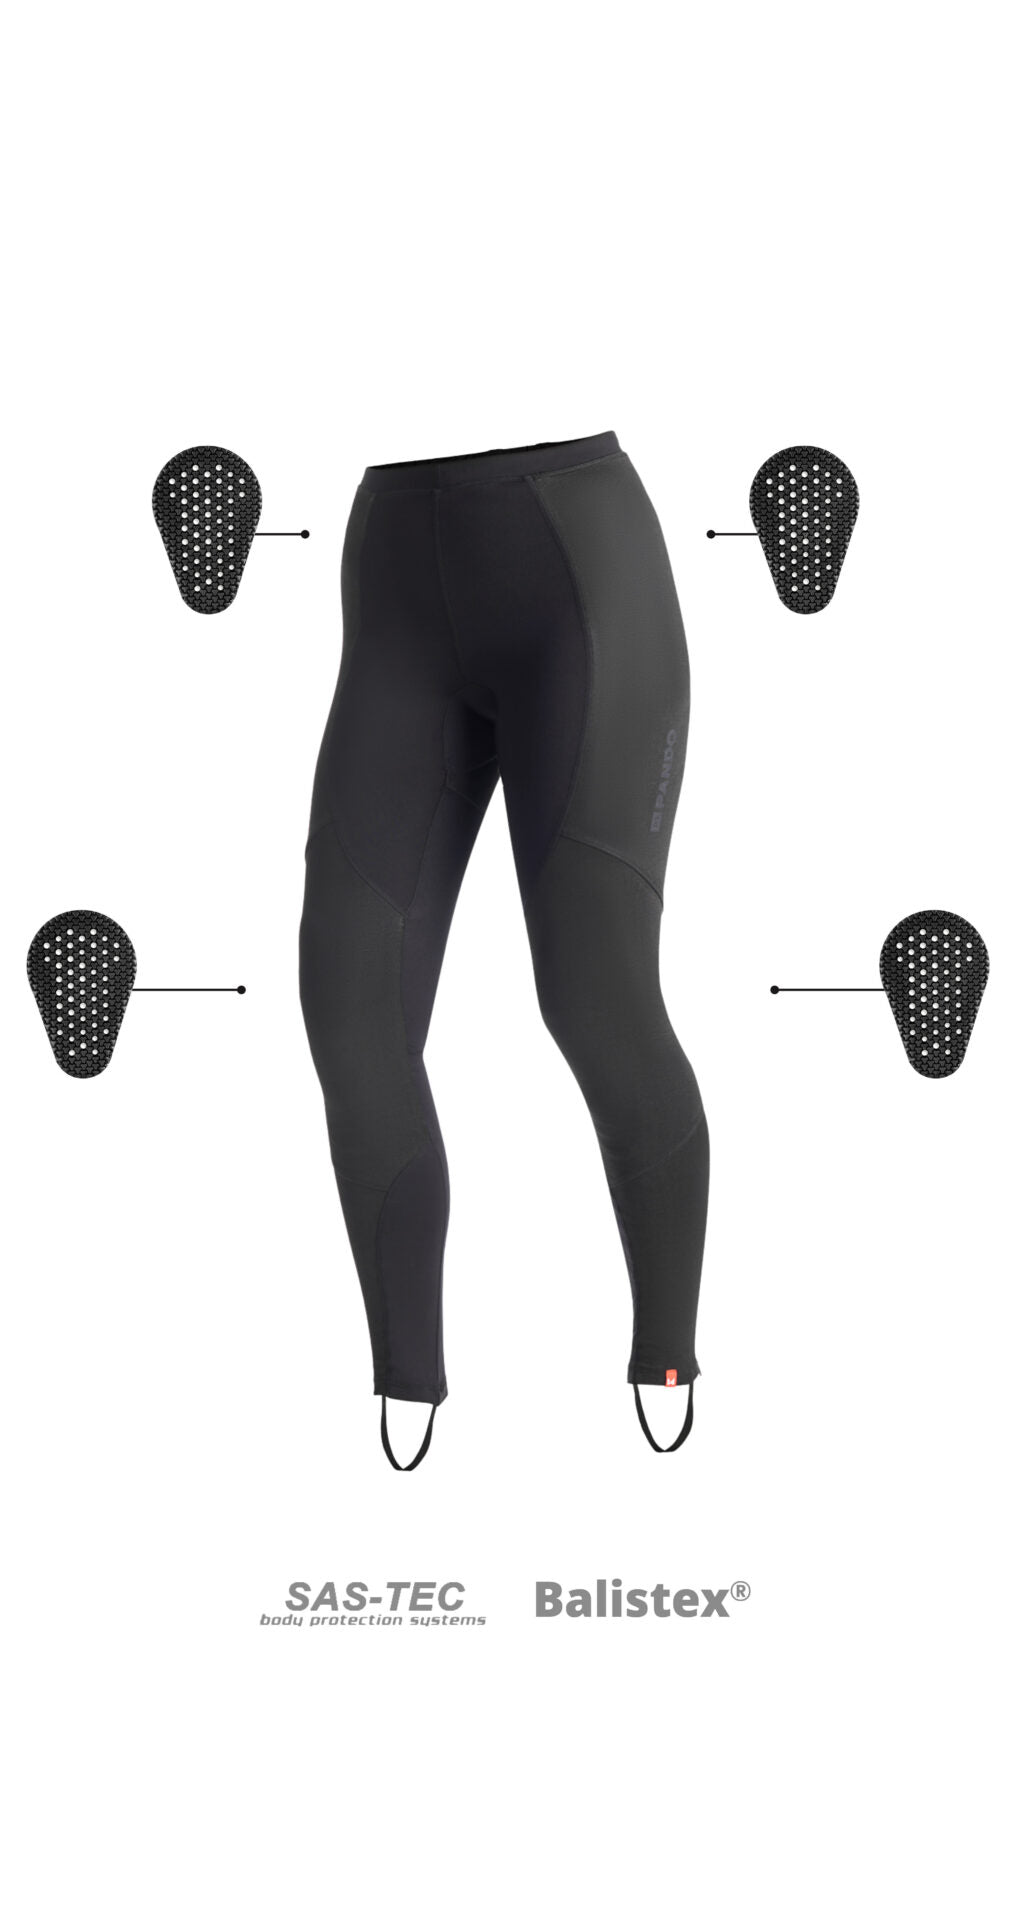  Pando Moto SKIN AAA armoured base layer leggings in black with hip and knee sas-tec protectors